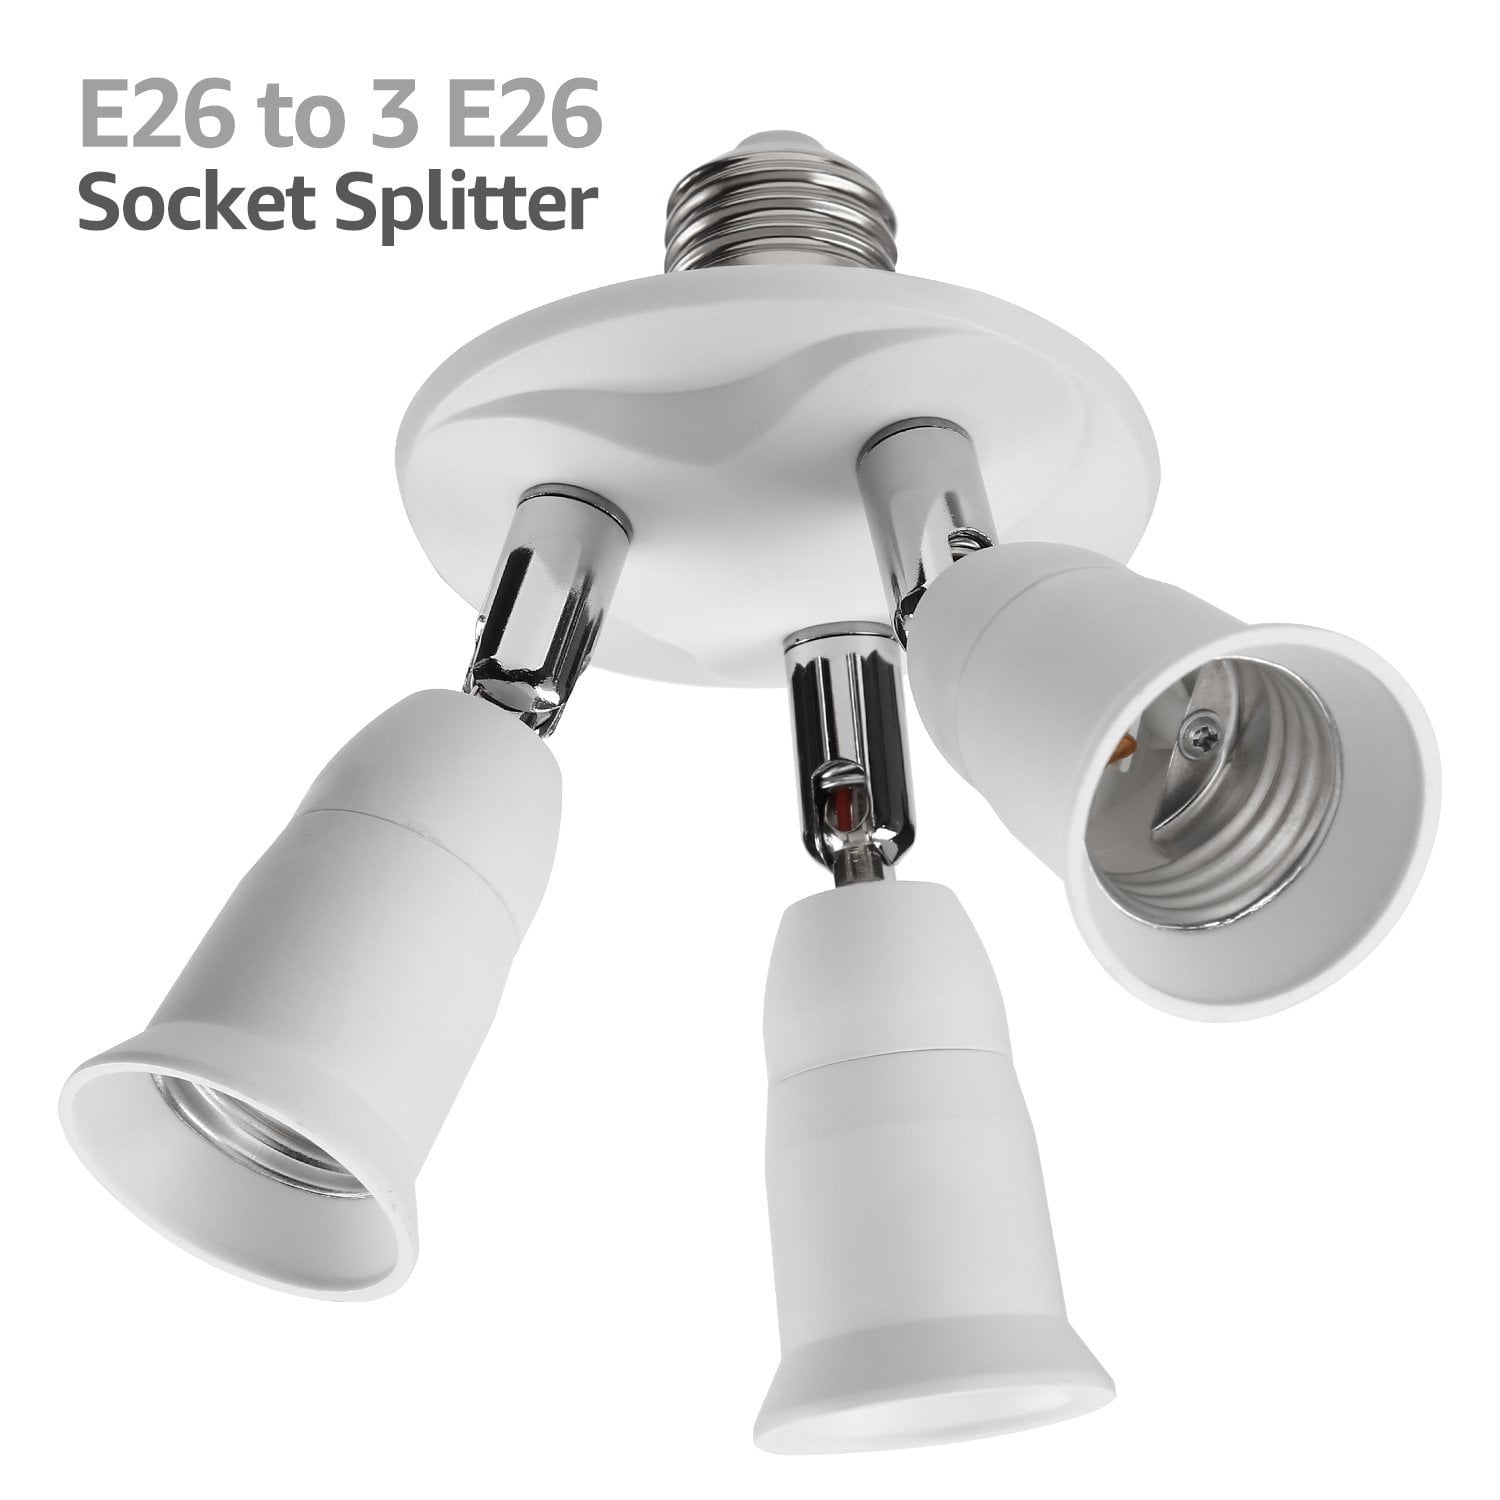 Smart E27 Lamp Holder Sound Light Control for LED Lamps Socket Adapter Converter 